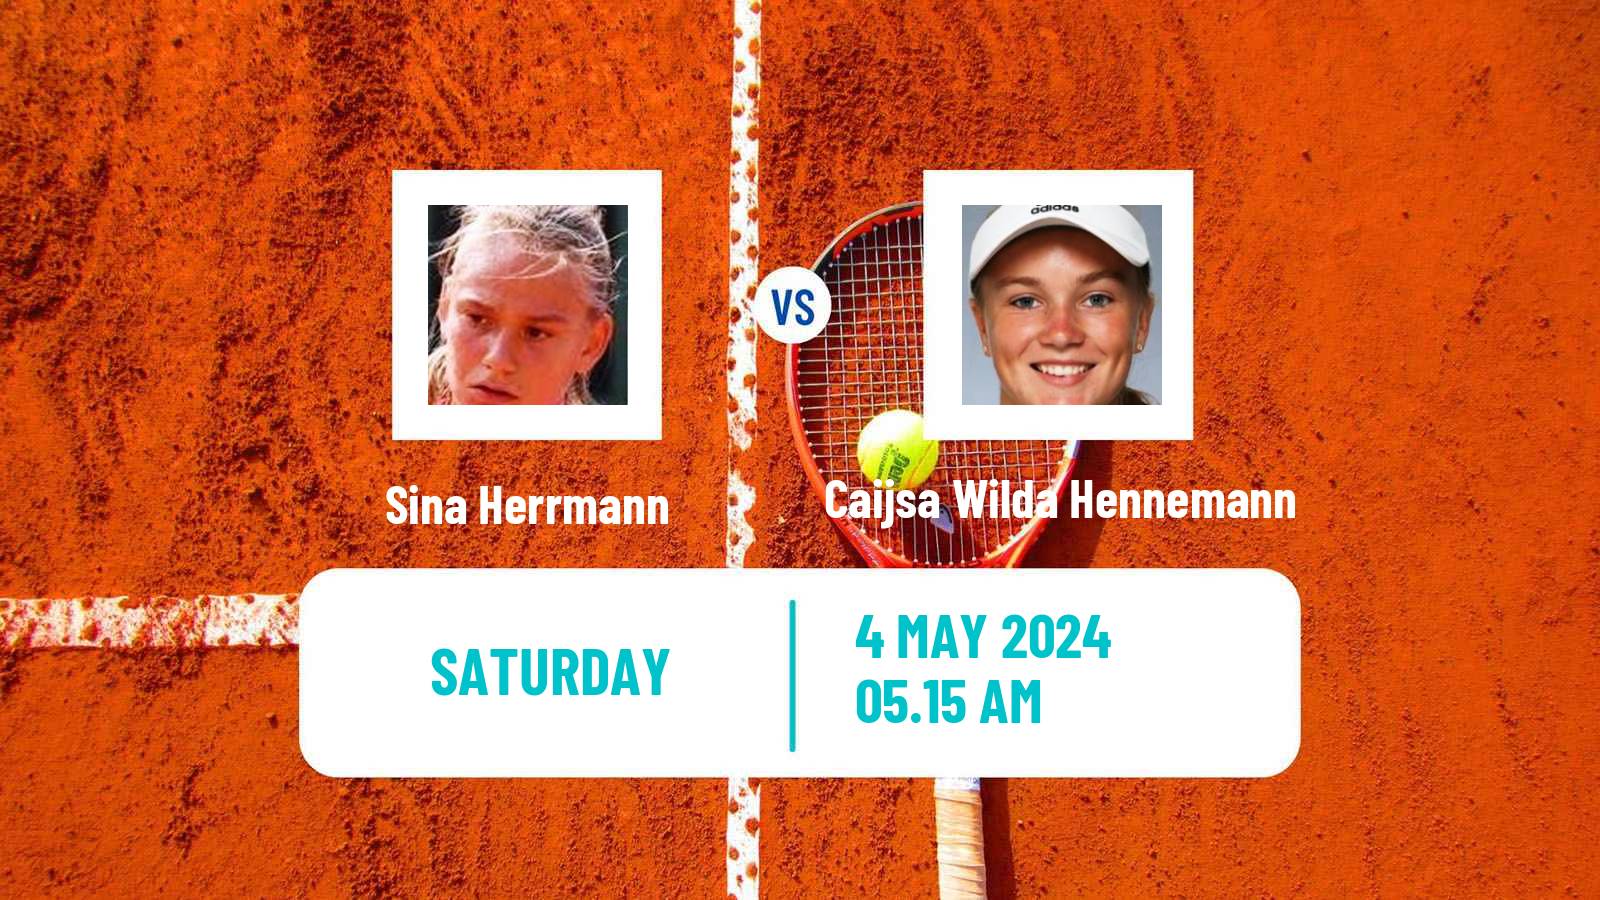 Tennis ITF W15 Varberg Women Sina Herrmann - Caijsa Wilda Hennemann